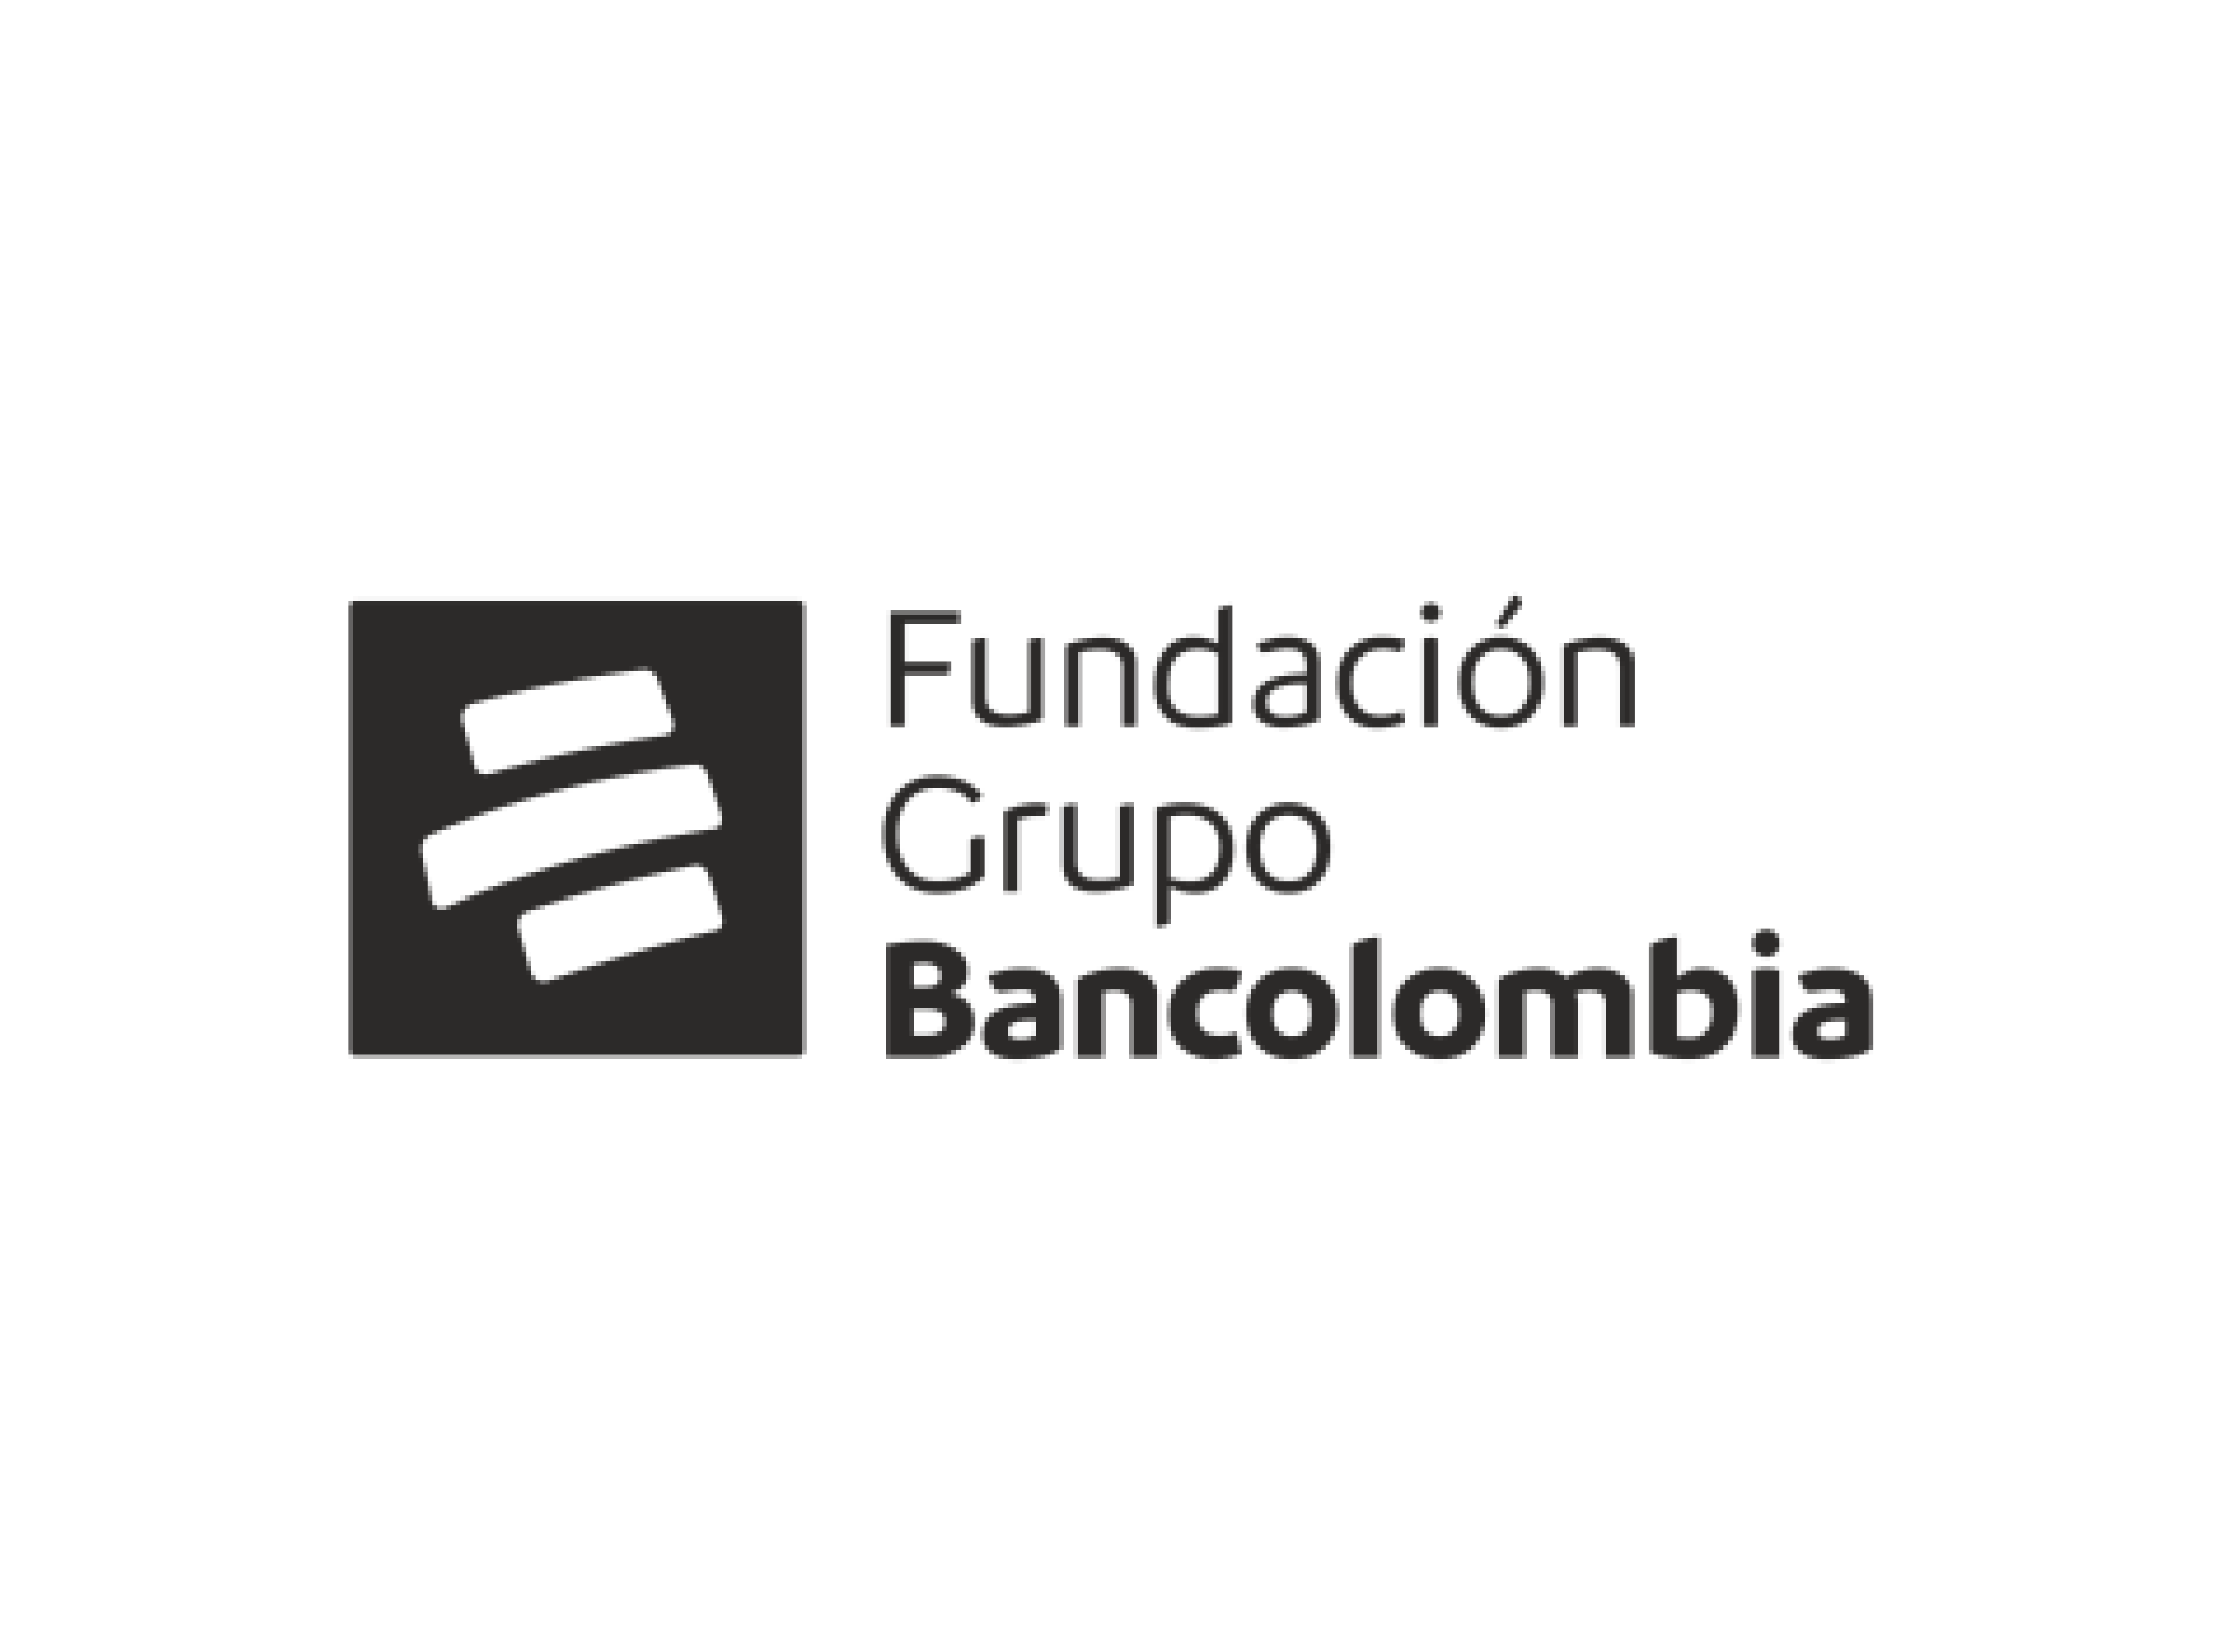 Fundacion Grupo Bancolombia